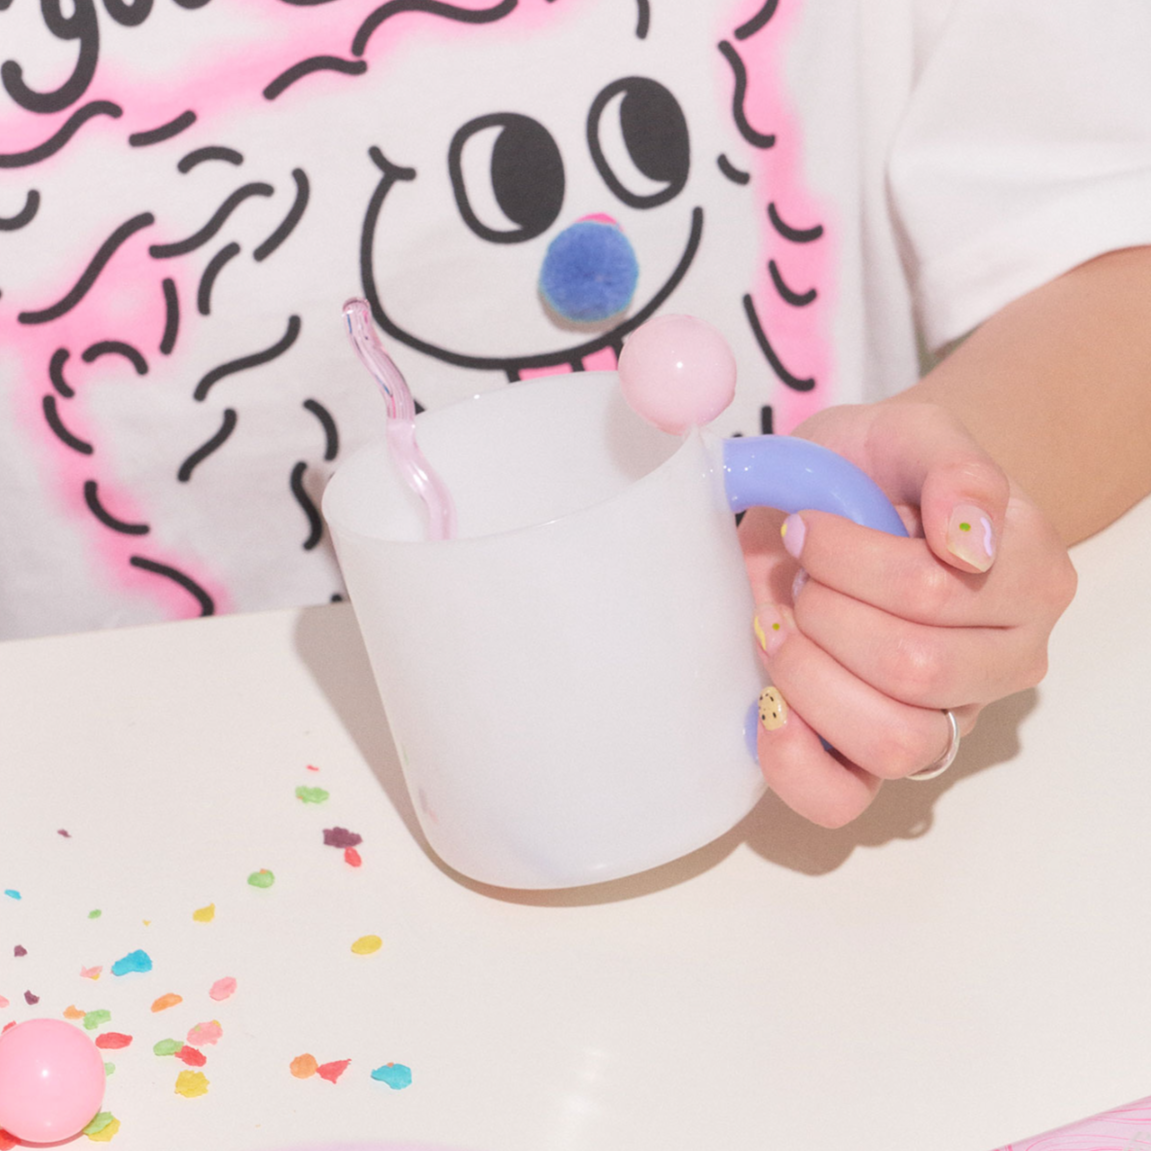 SRM - Solid Color Candy Mug-Drinkware- A Bit Sleepy | Homedecor Concept Store